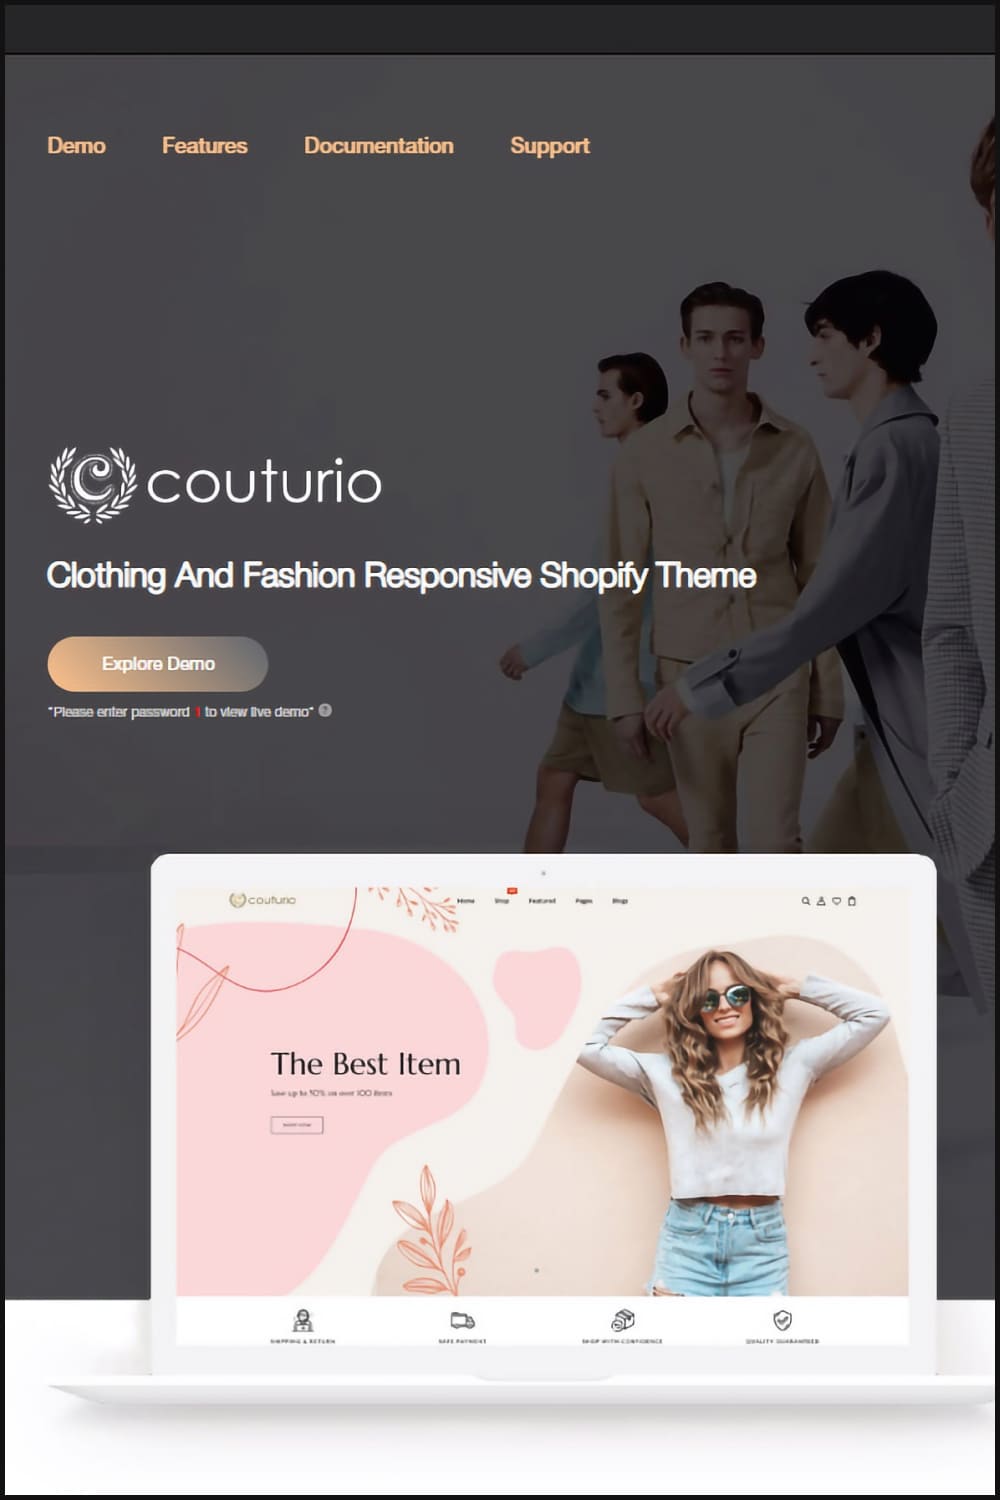 Couturio clothing and fashion responsive shopify theme.